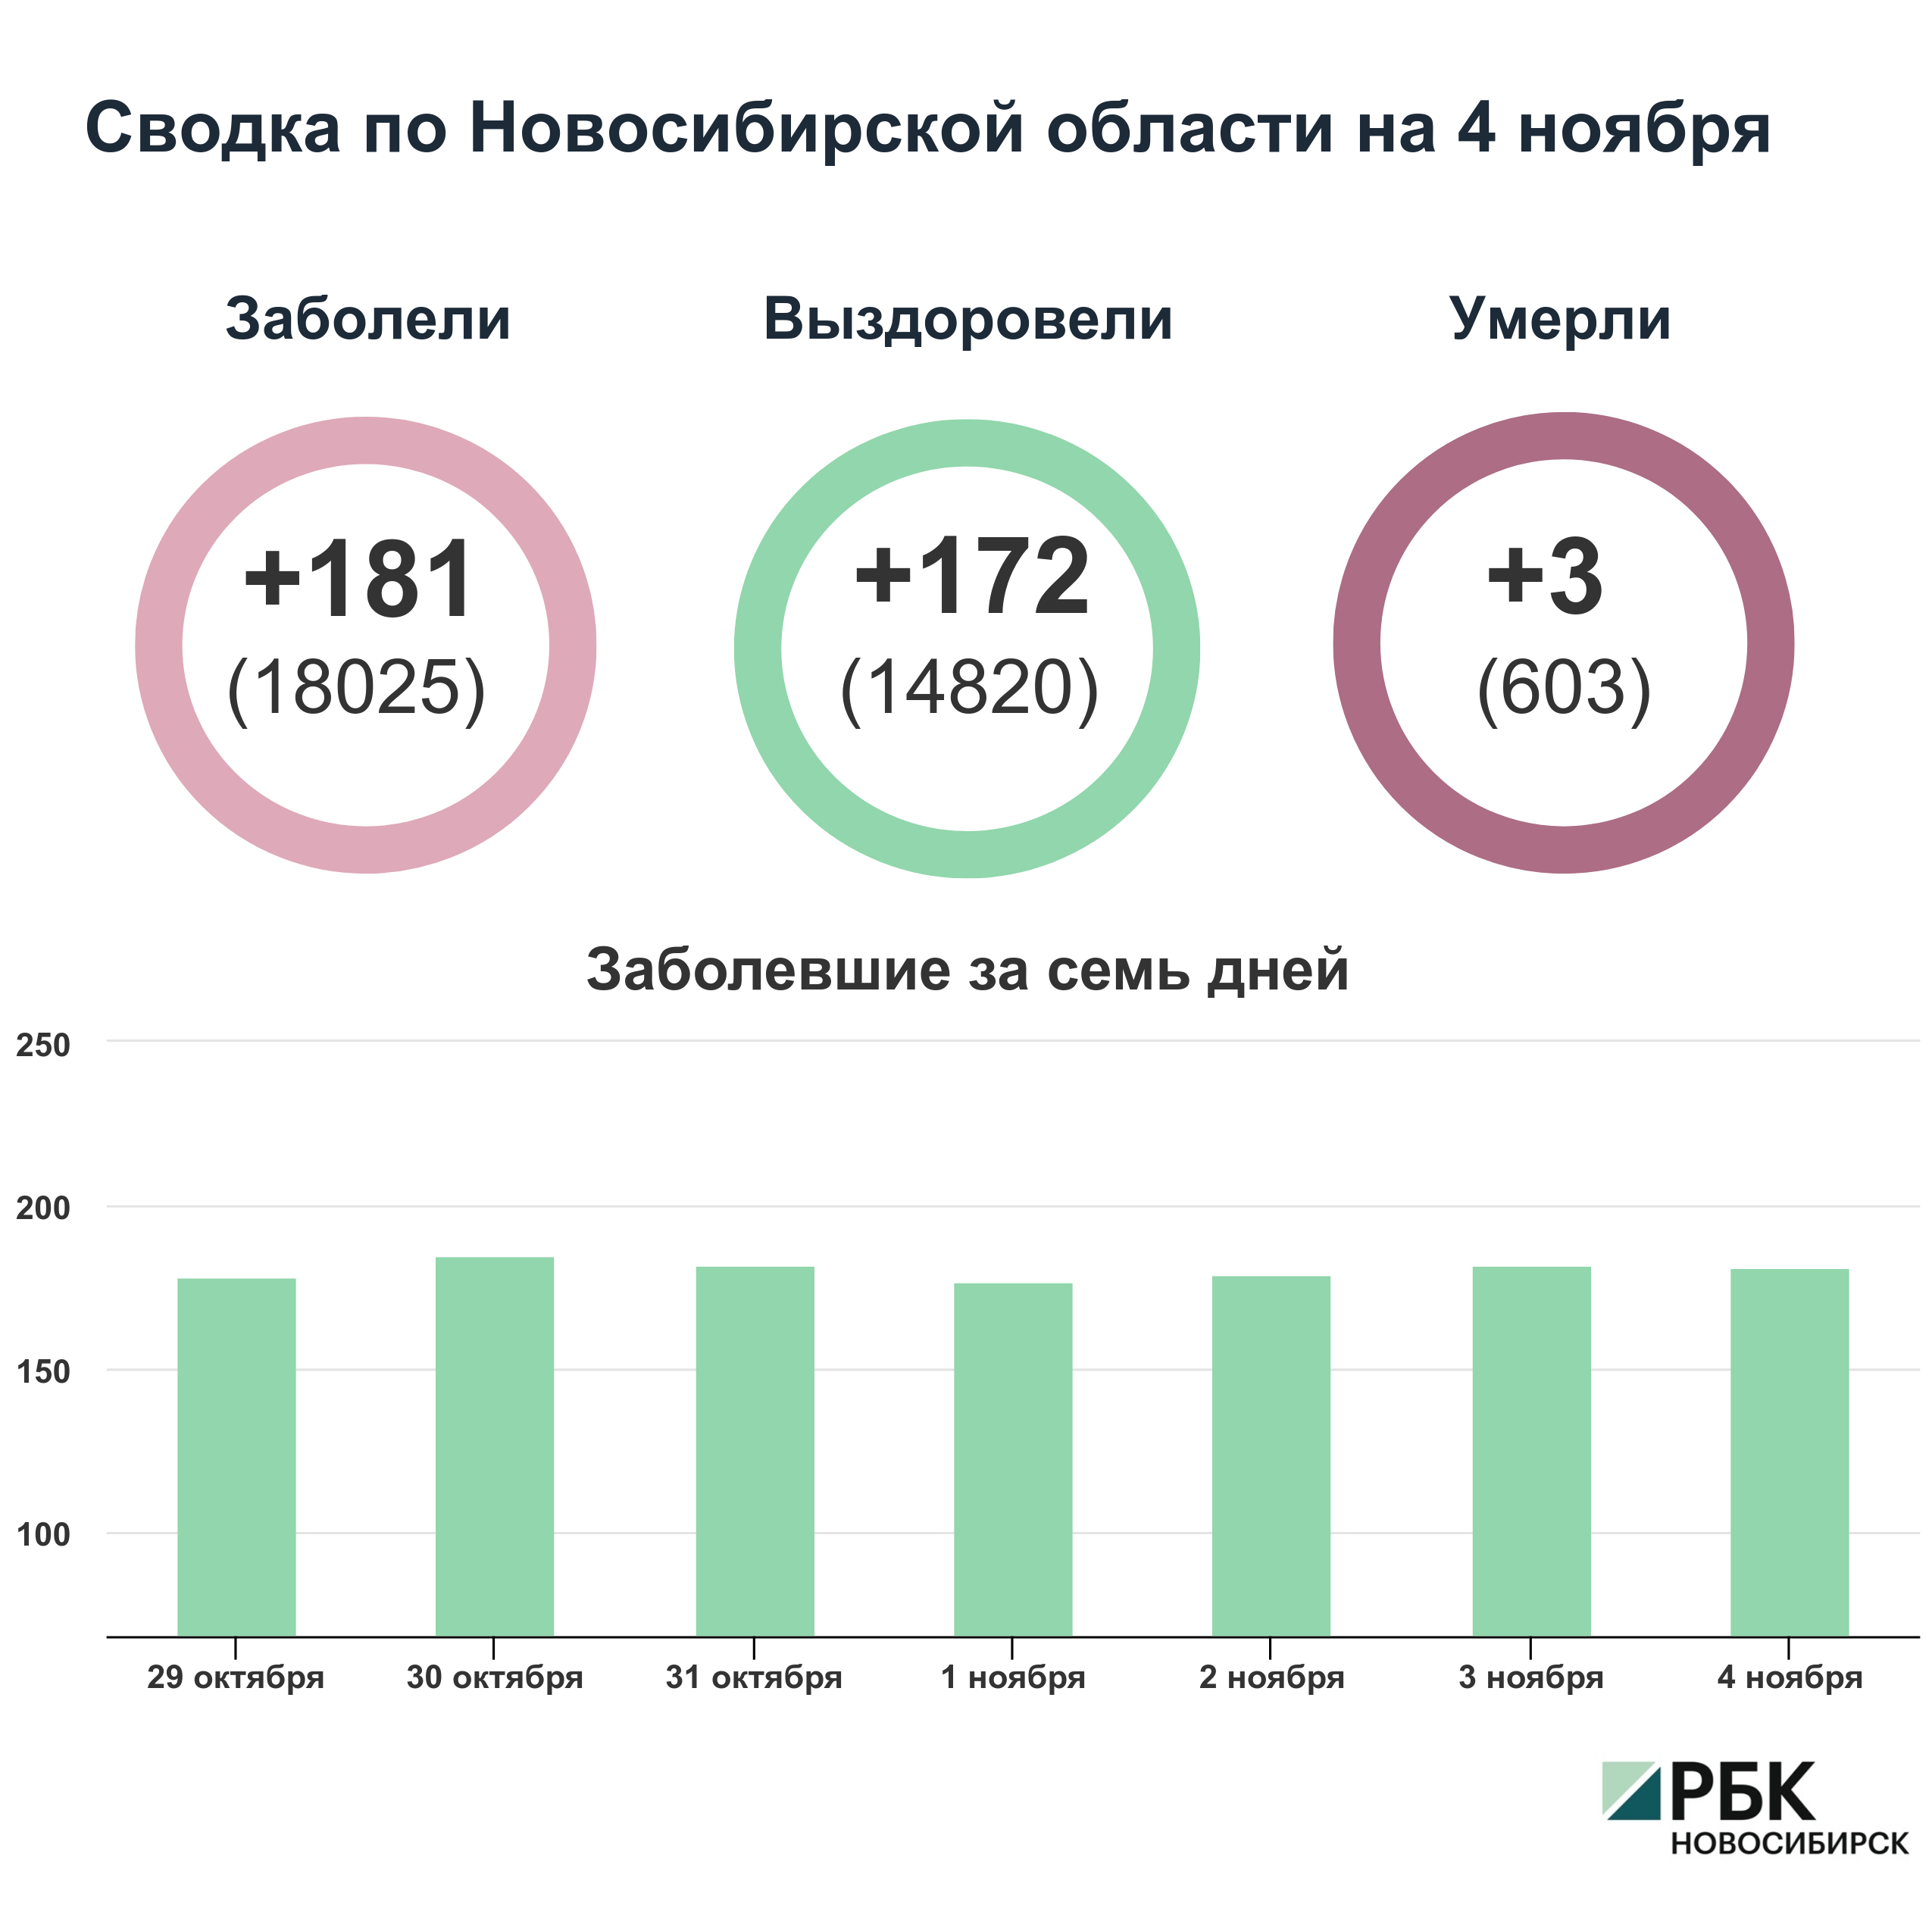 Коронавирус в Новосибирске: сводка на 4 ноября